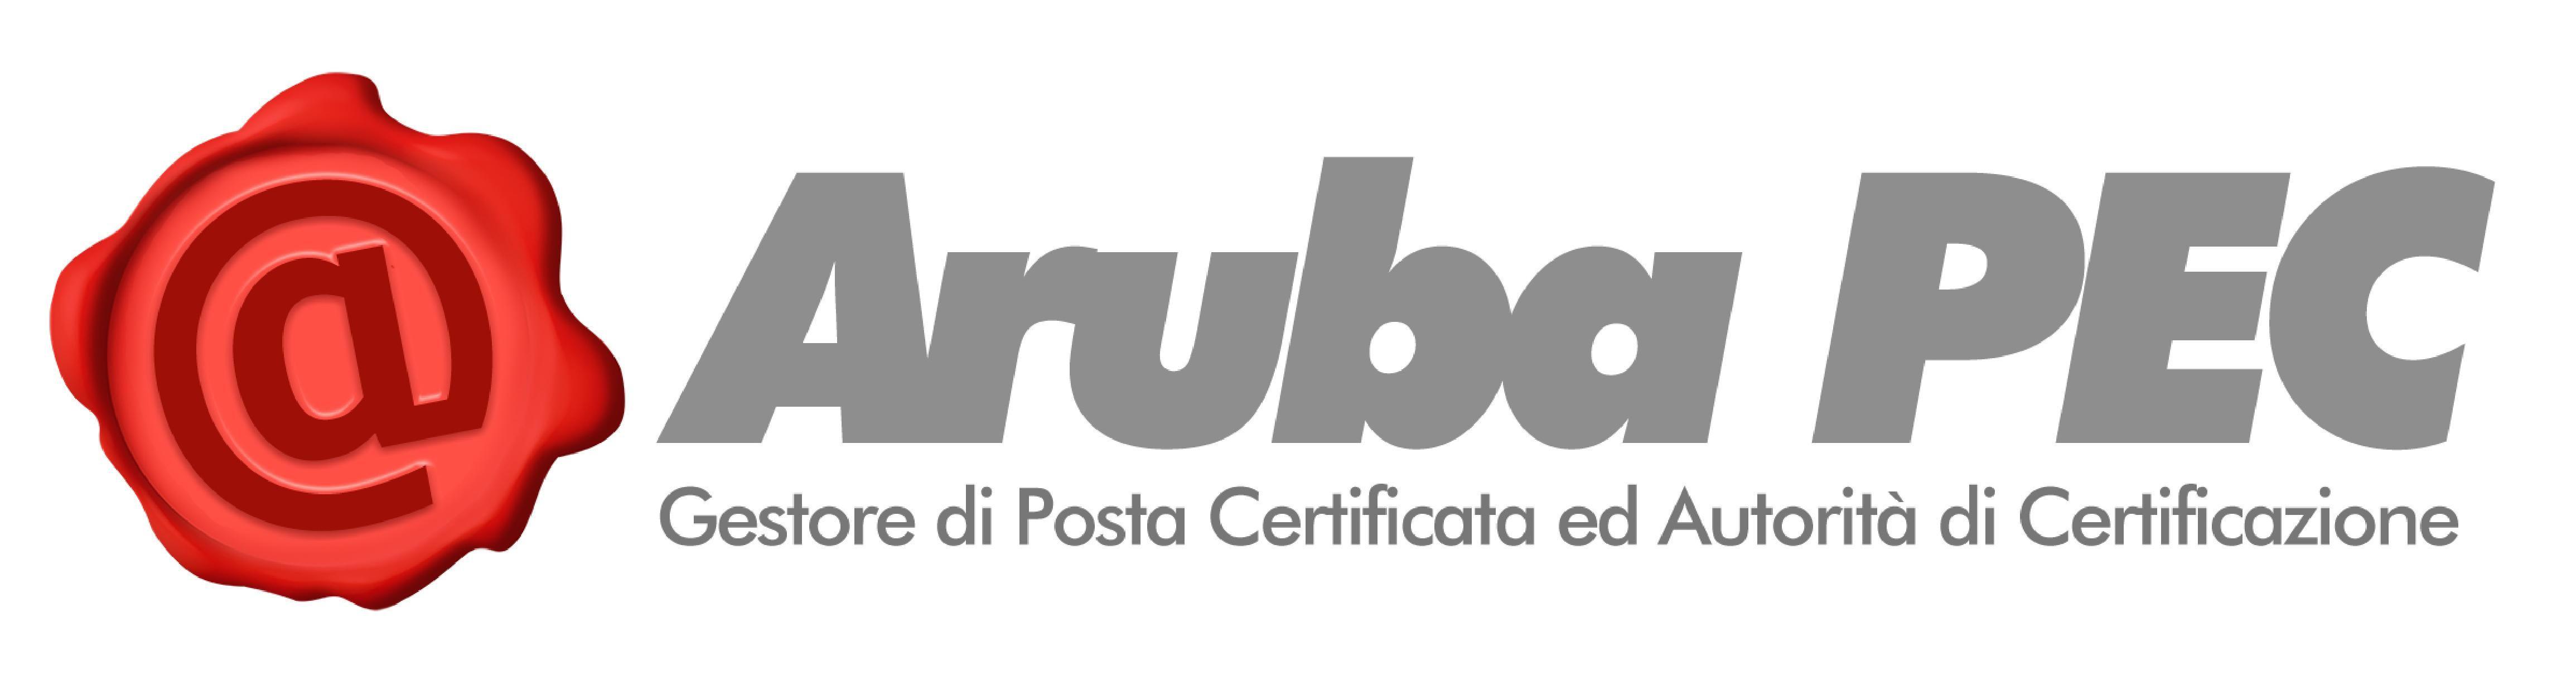 PEC Logo - 2018_Aruba Pec Logo Page 001 PA 2018